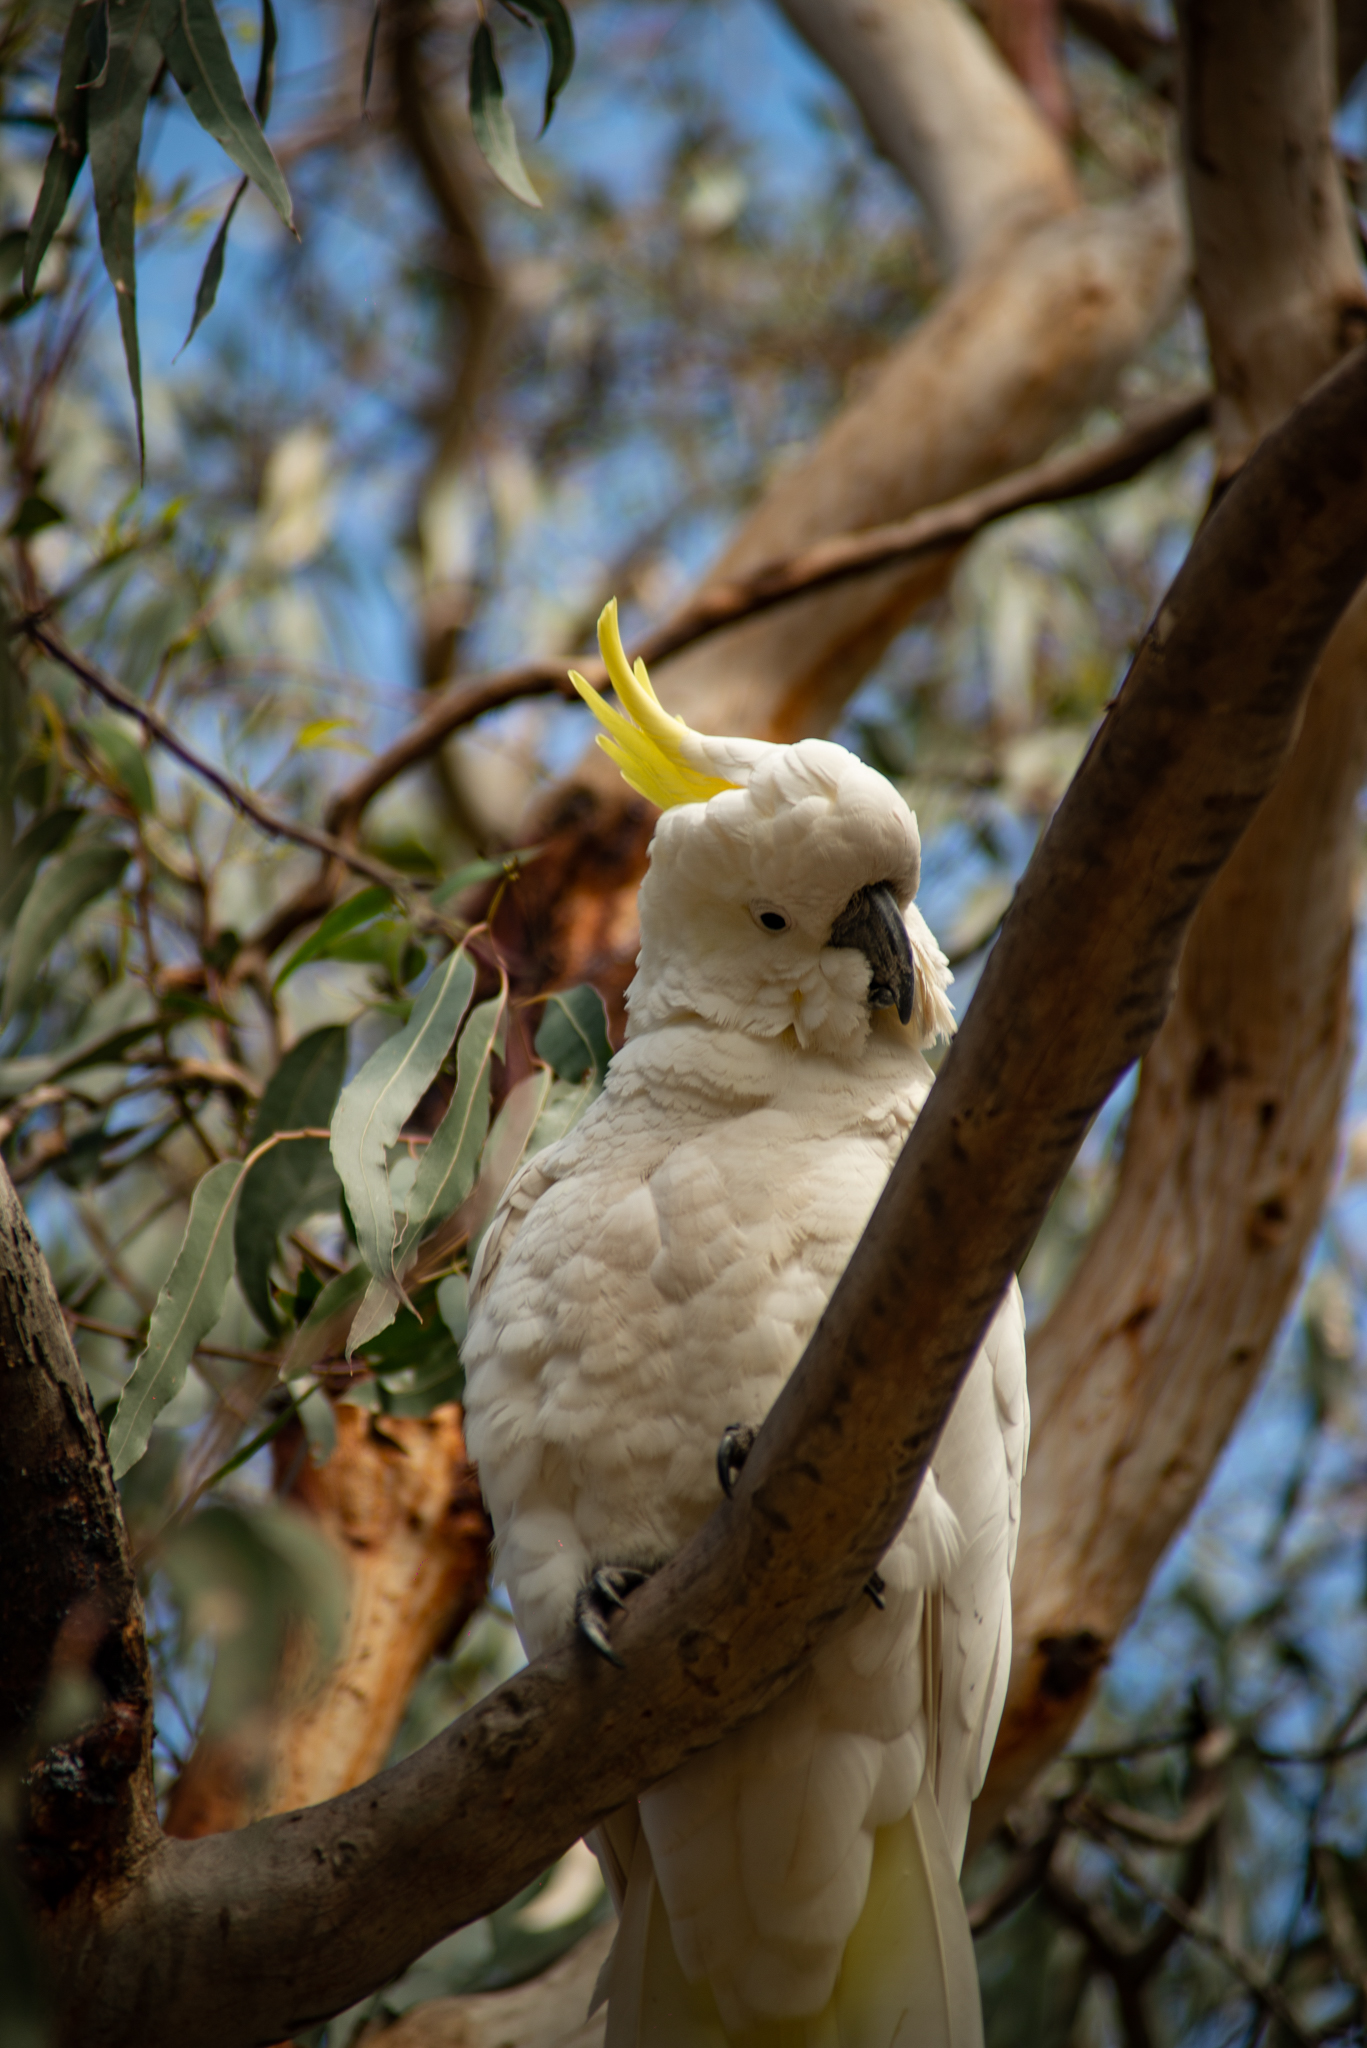 Sulphur Crested Cockatoos